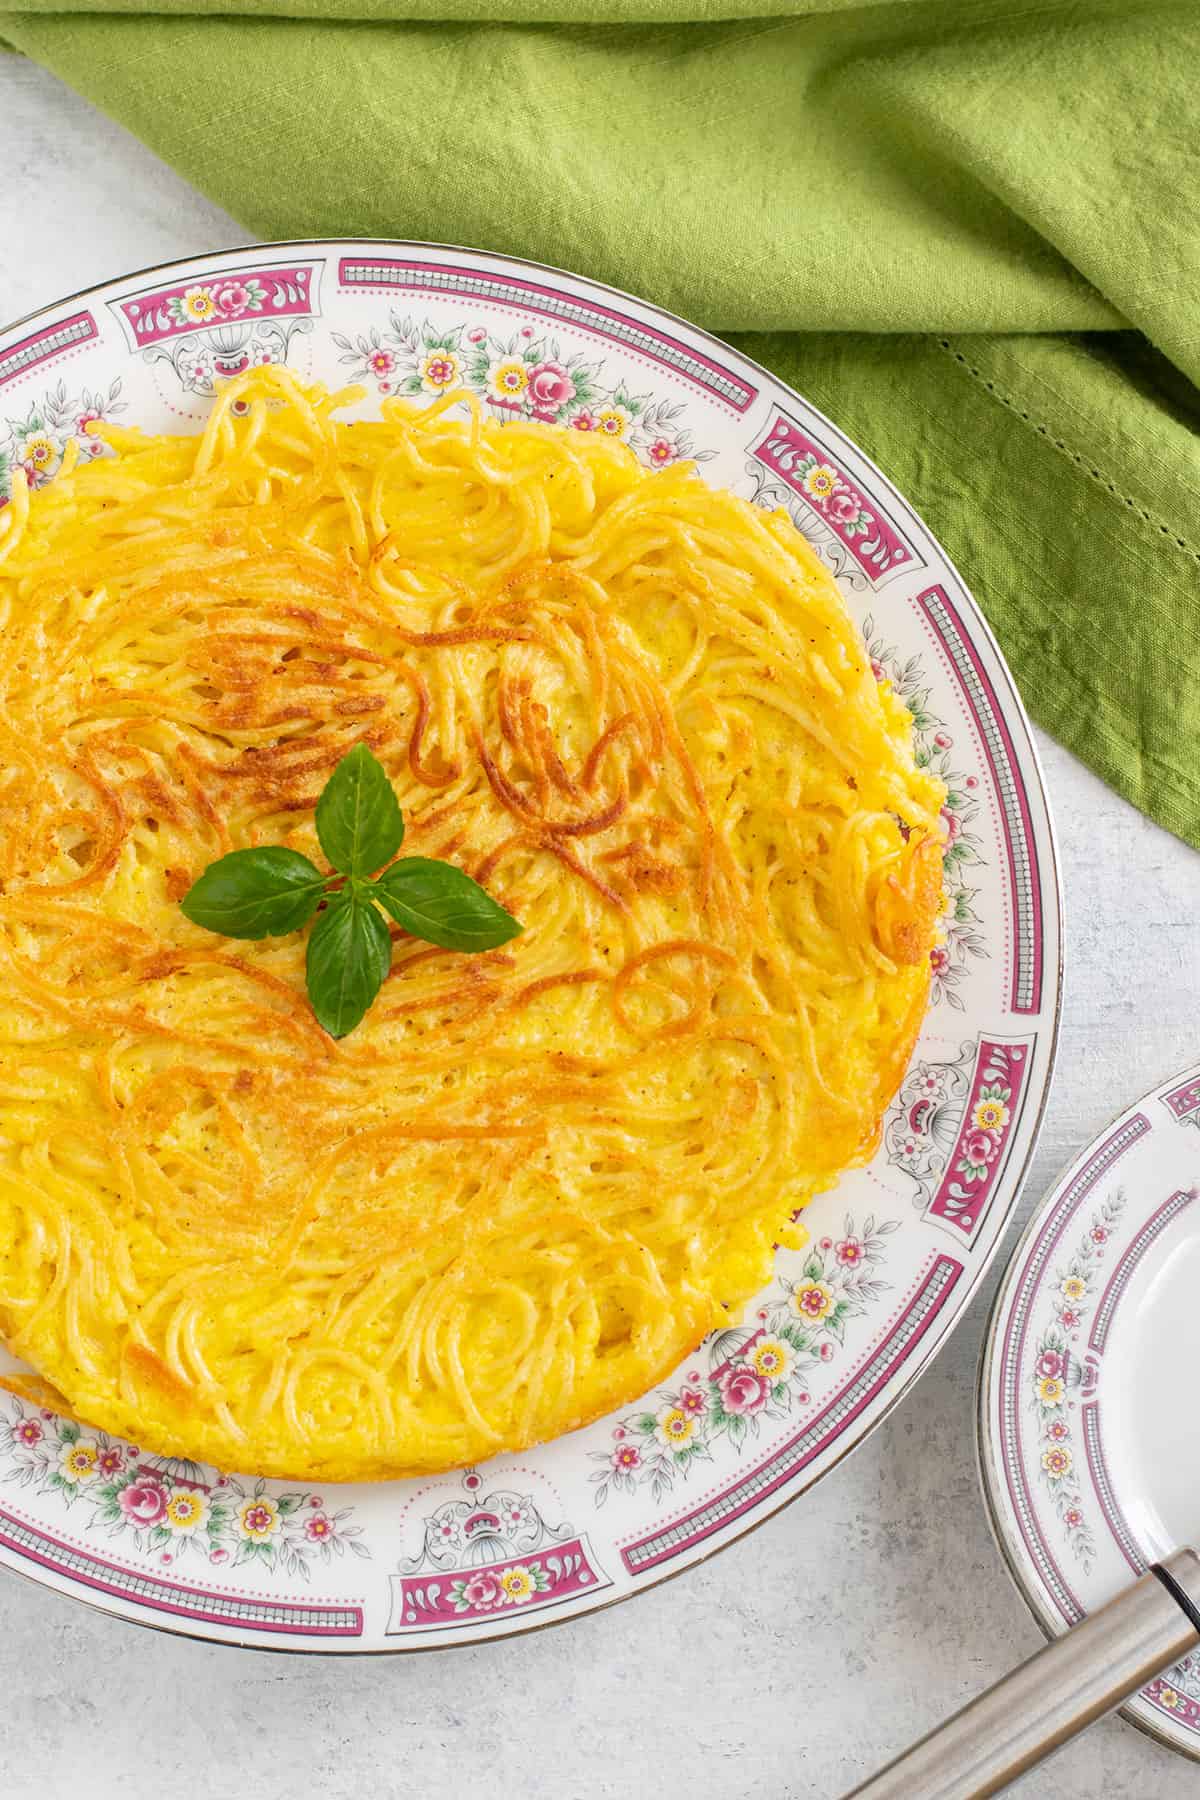 prepared spaghetti frittata garnished with basil